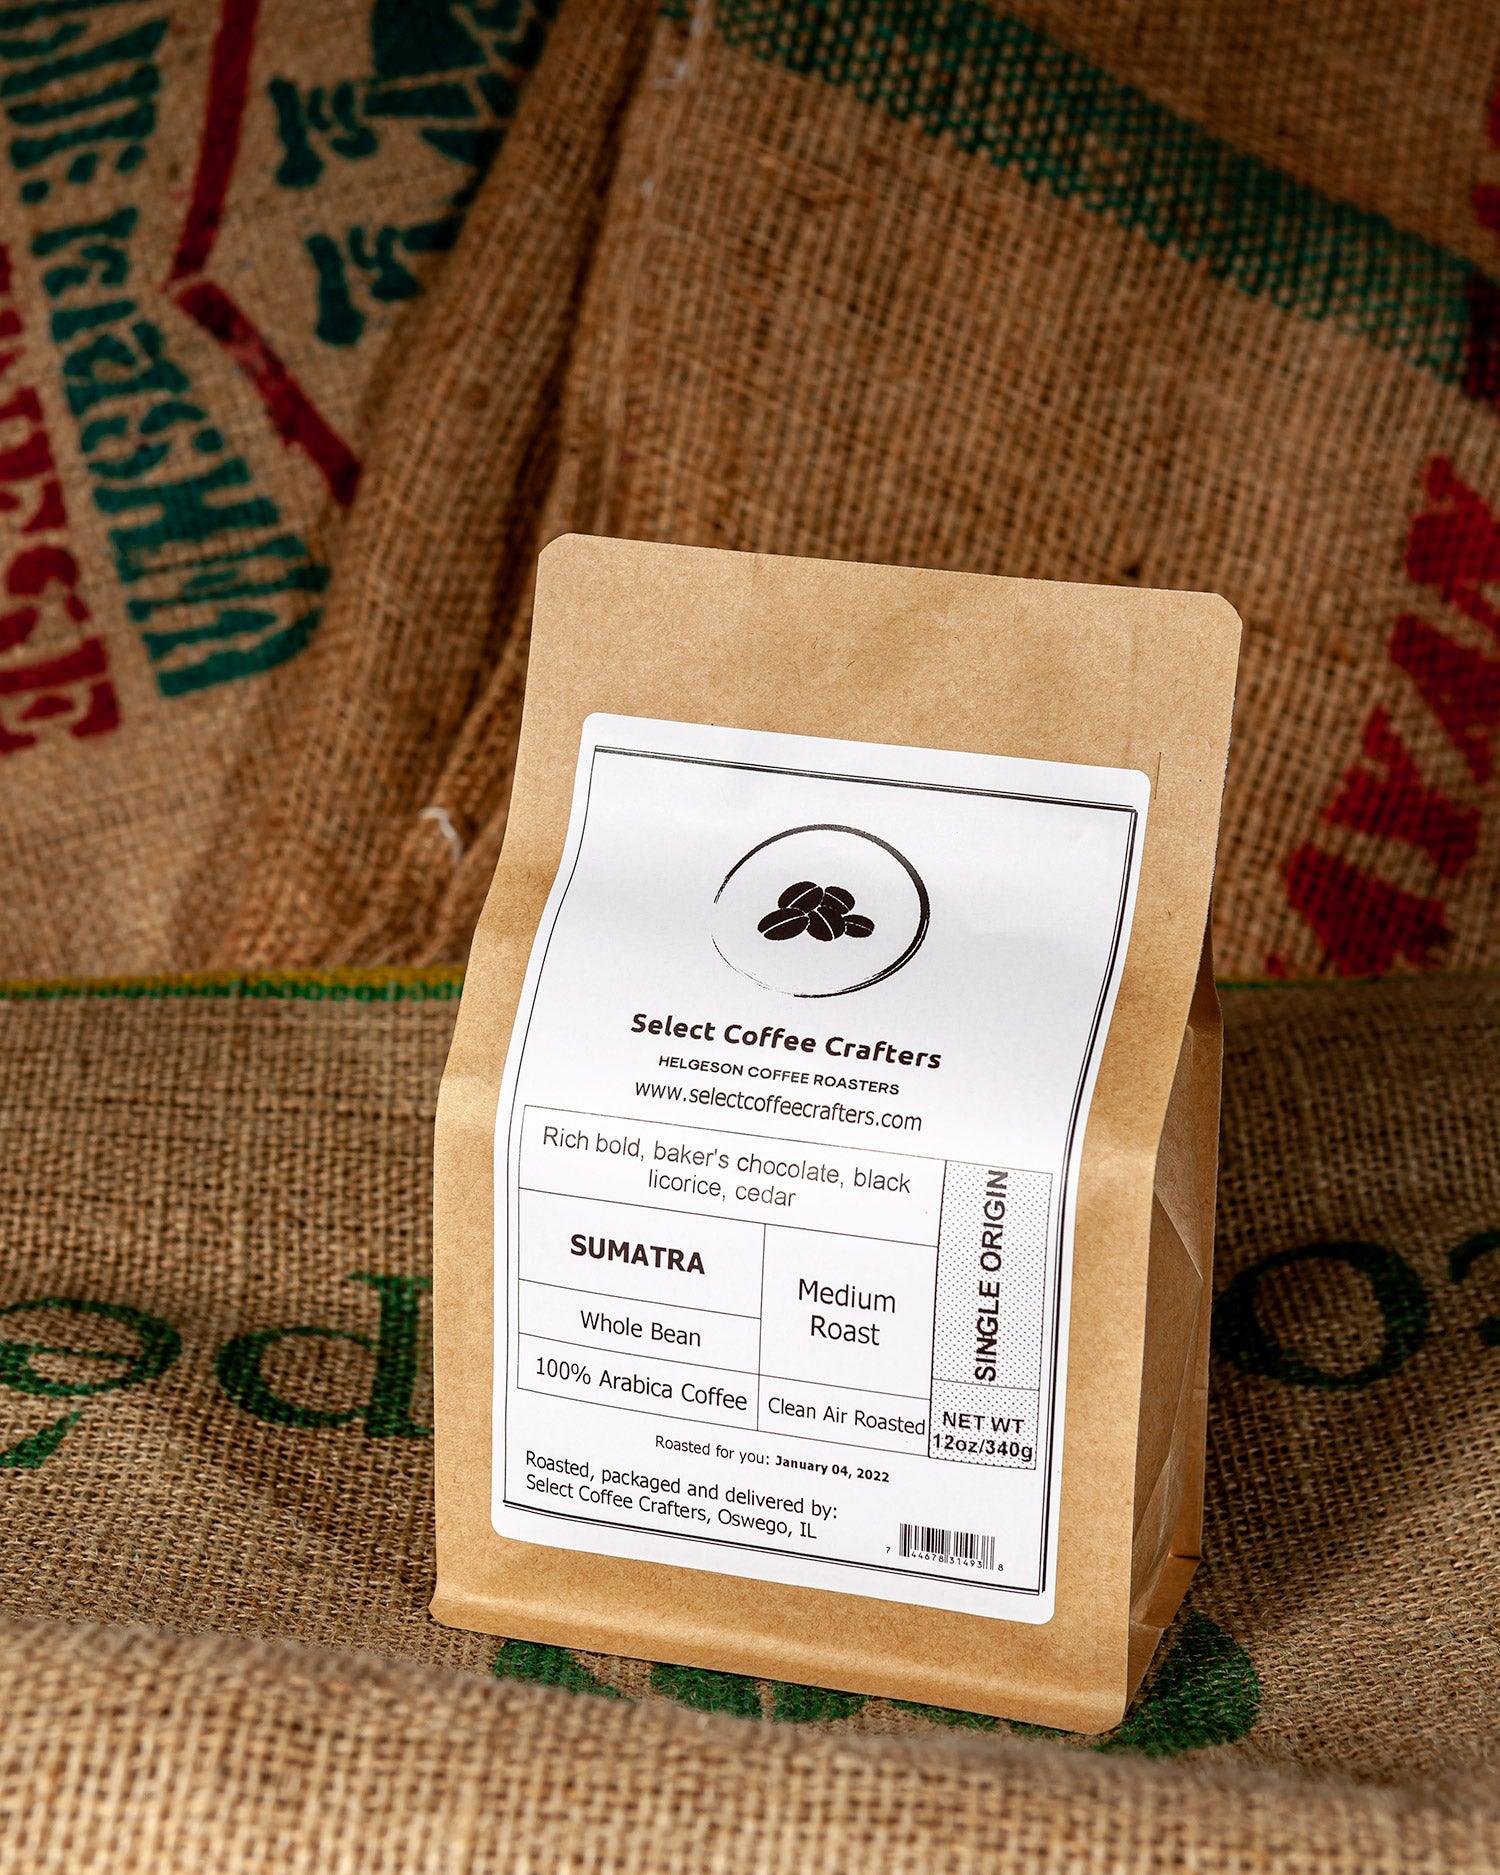 Sumatra - Select Coffee Crafters LLC